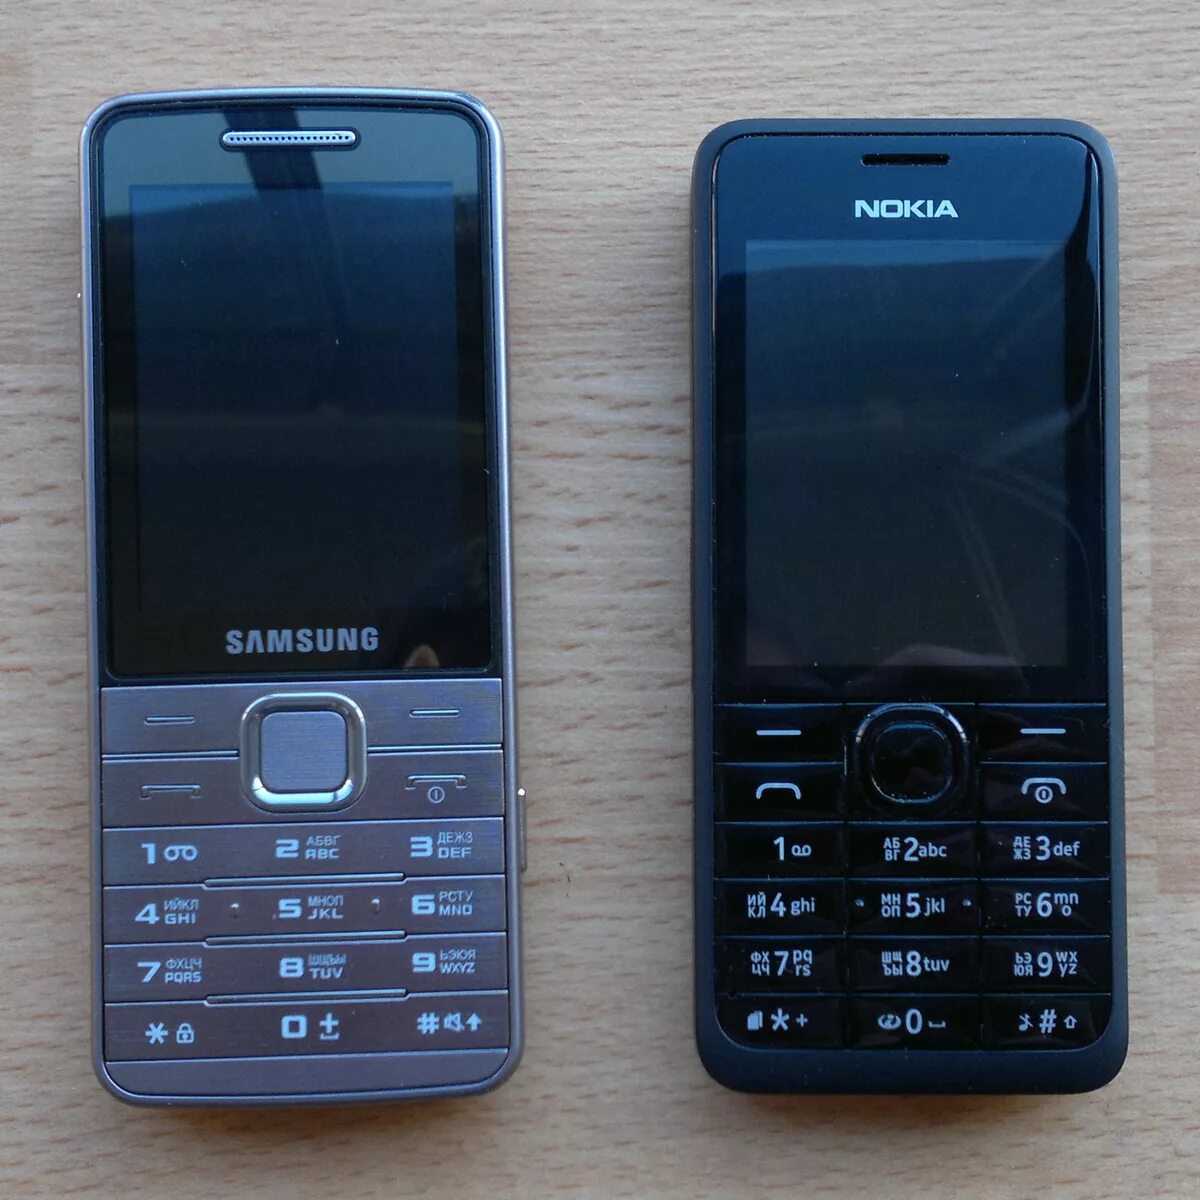 Самсунг 5610. Samsung gt s5610. Samsung 5610. Самсунг GTS 5610. Nokia s5610.